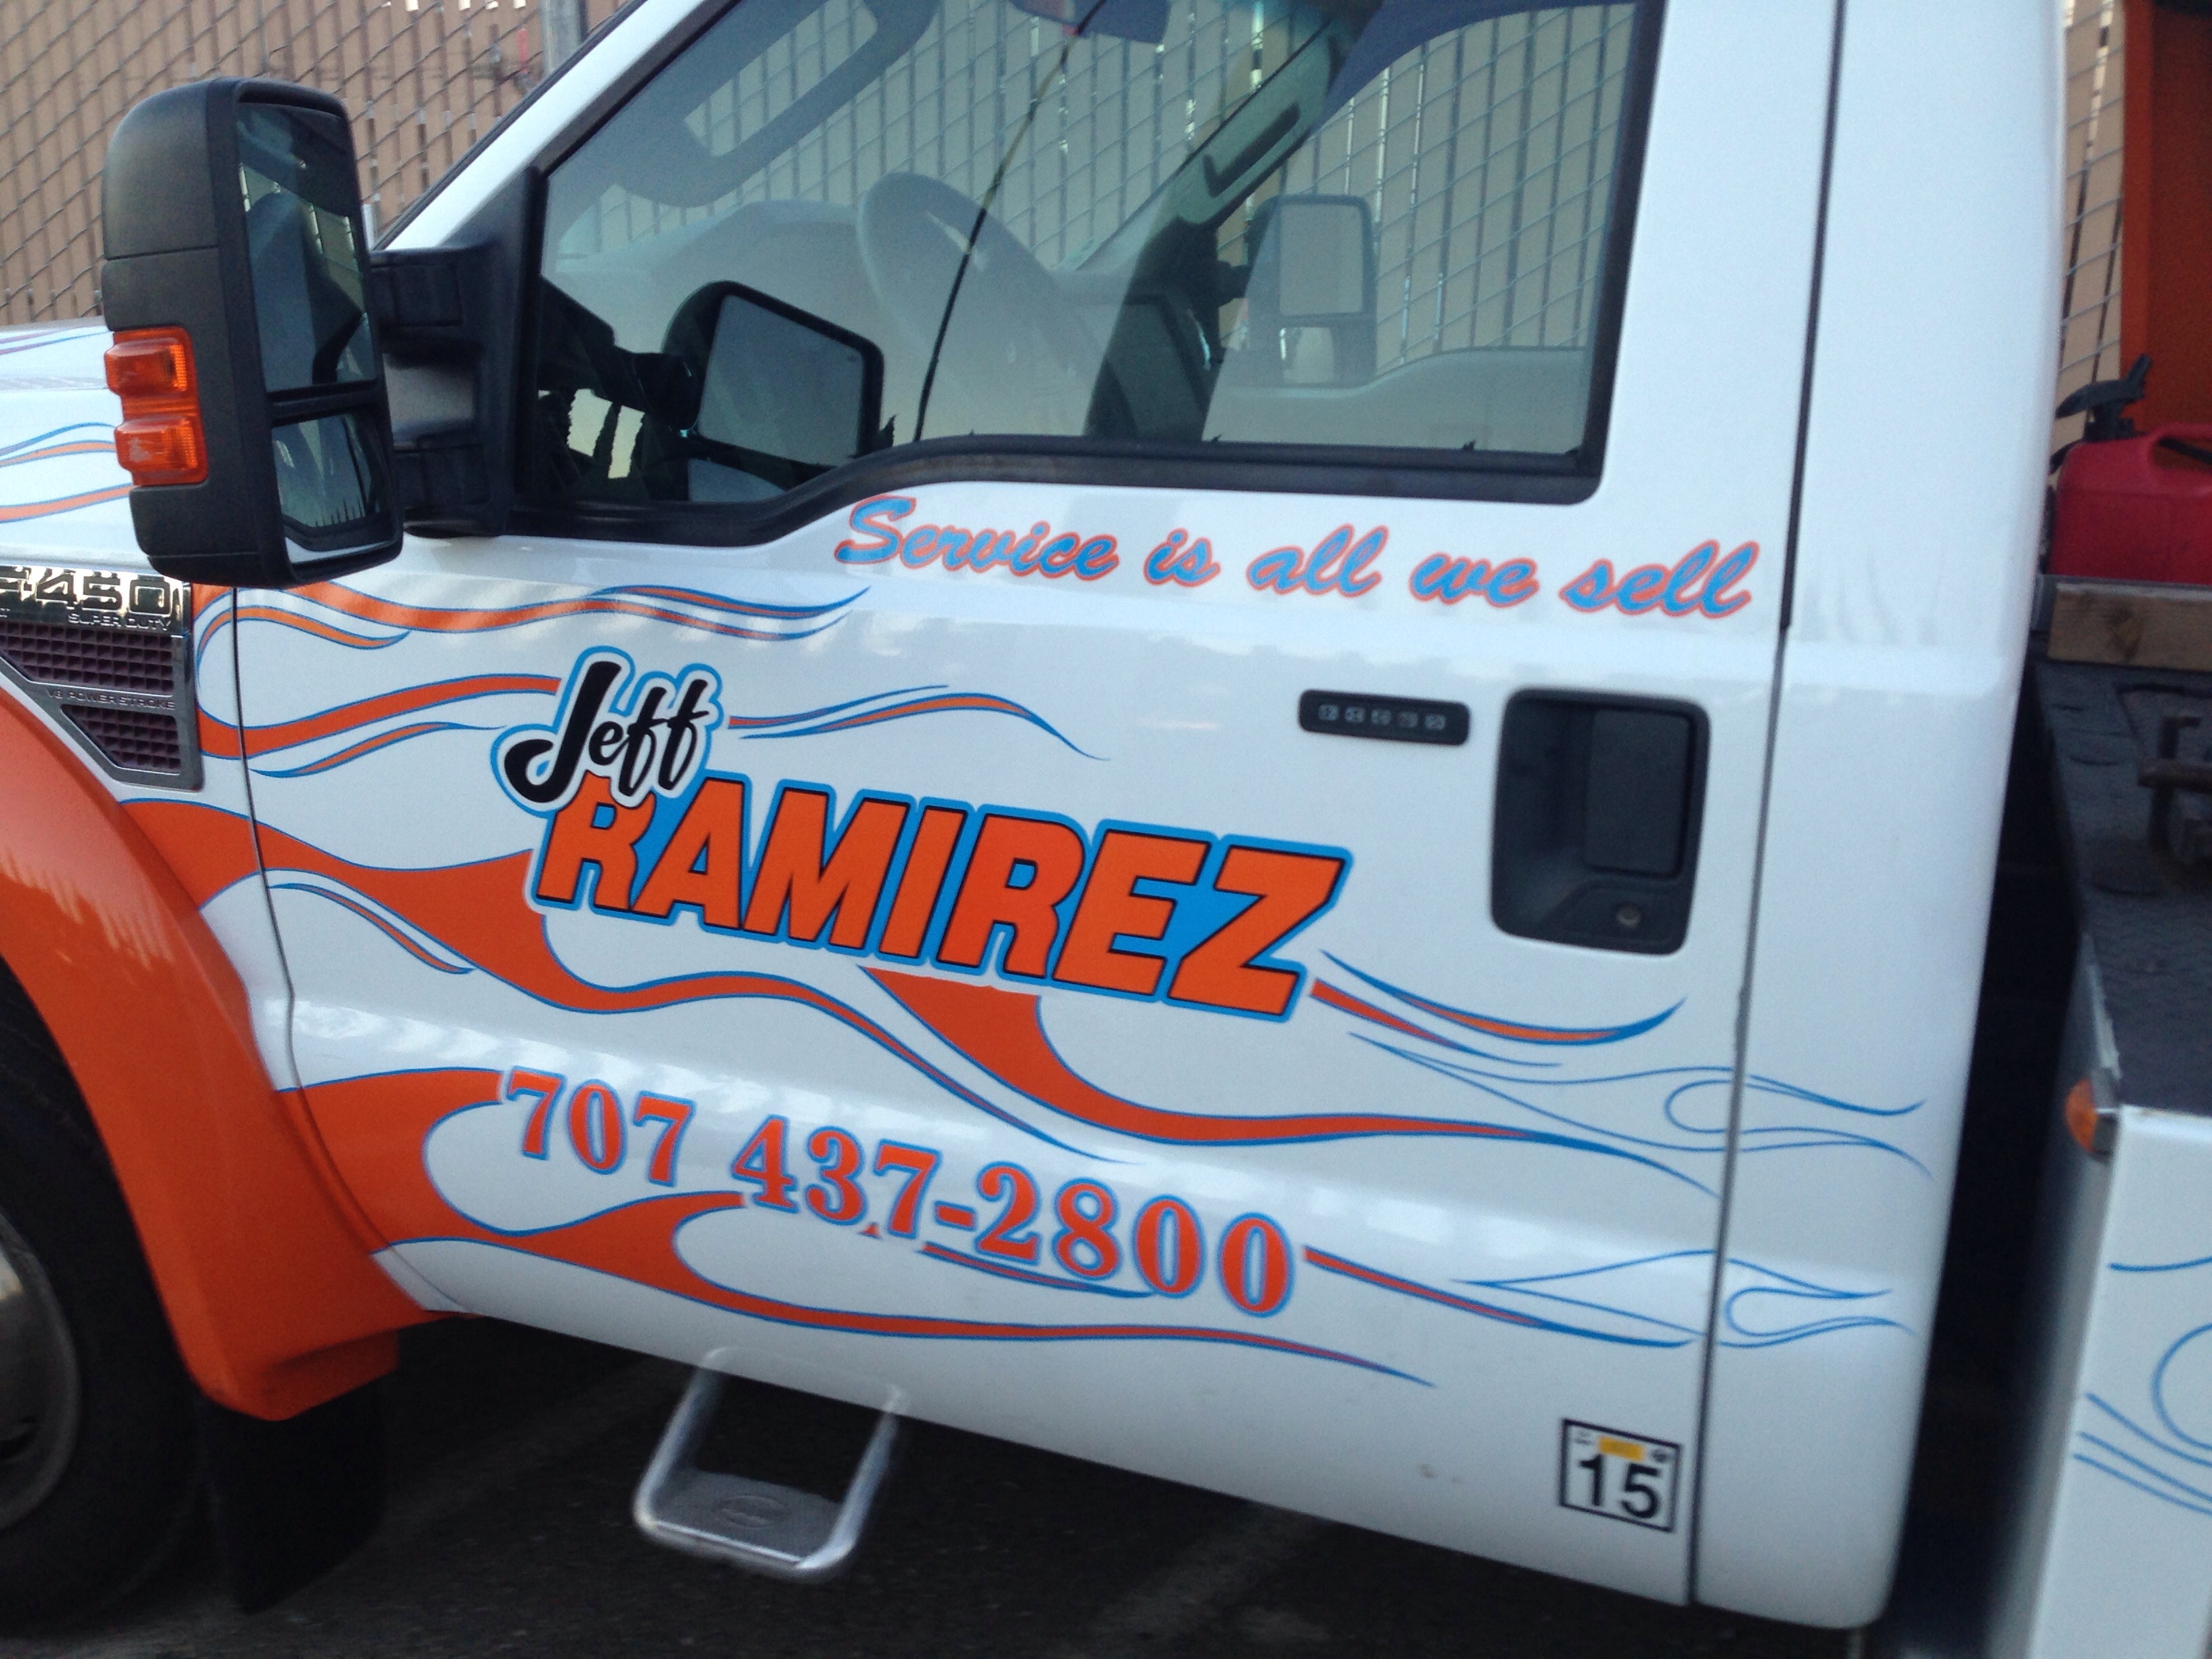 Jeff Ramirez Towing | Fairfield, California | 707-437-2800 | Emergency Roadside Assistance | Acciden Jeff Ramirez Towing Fairfield (707)437-2800